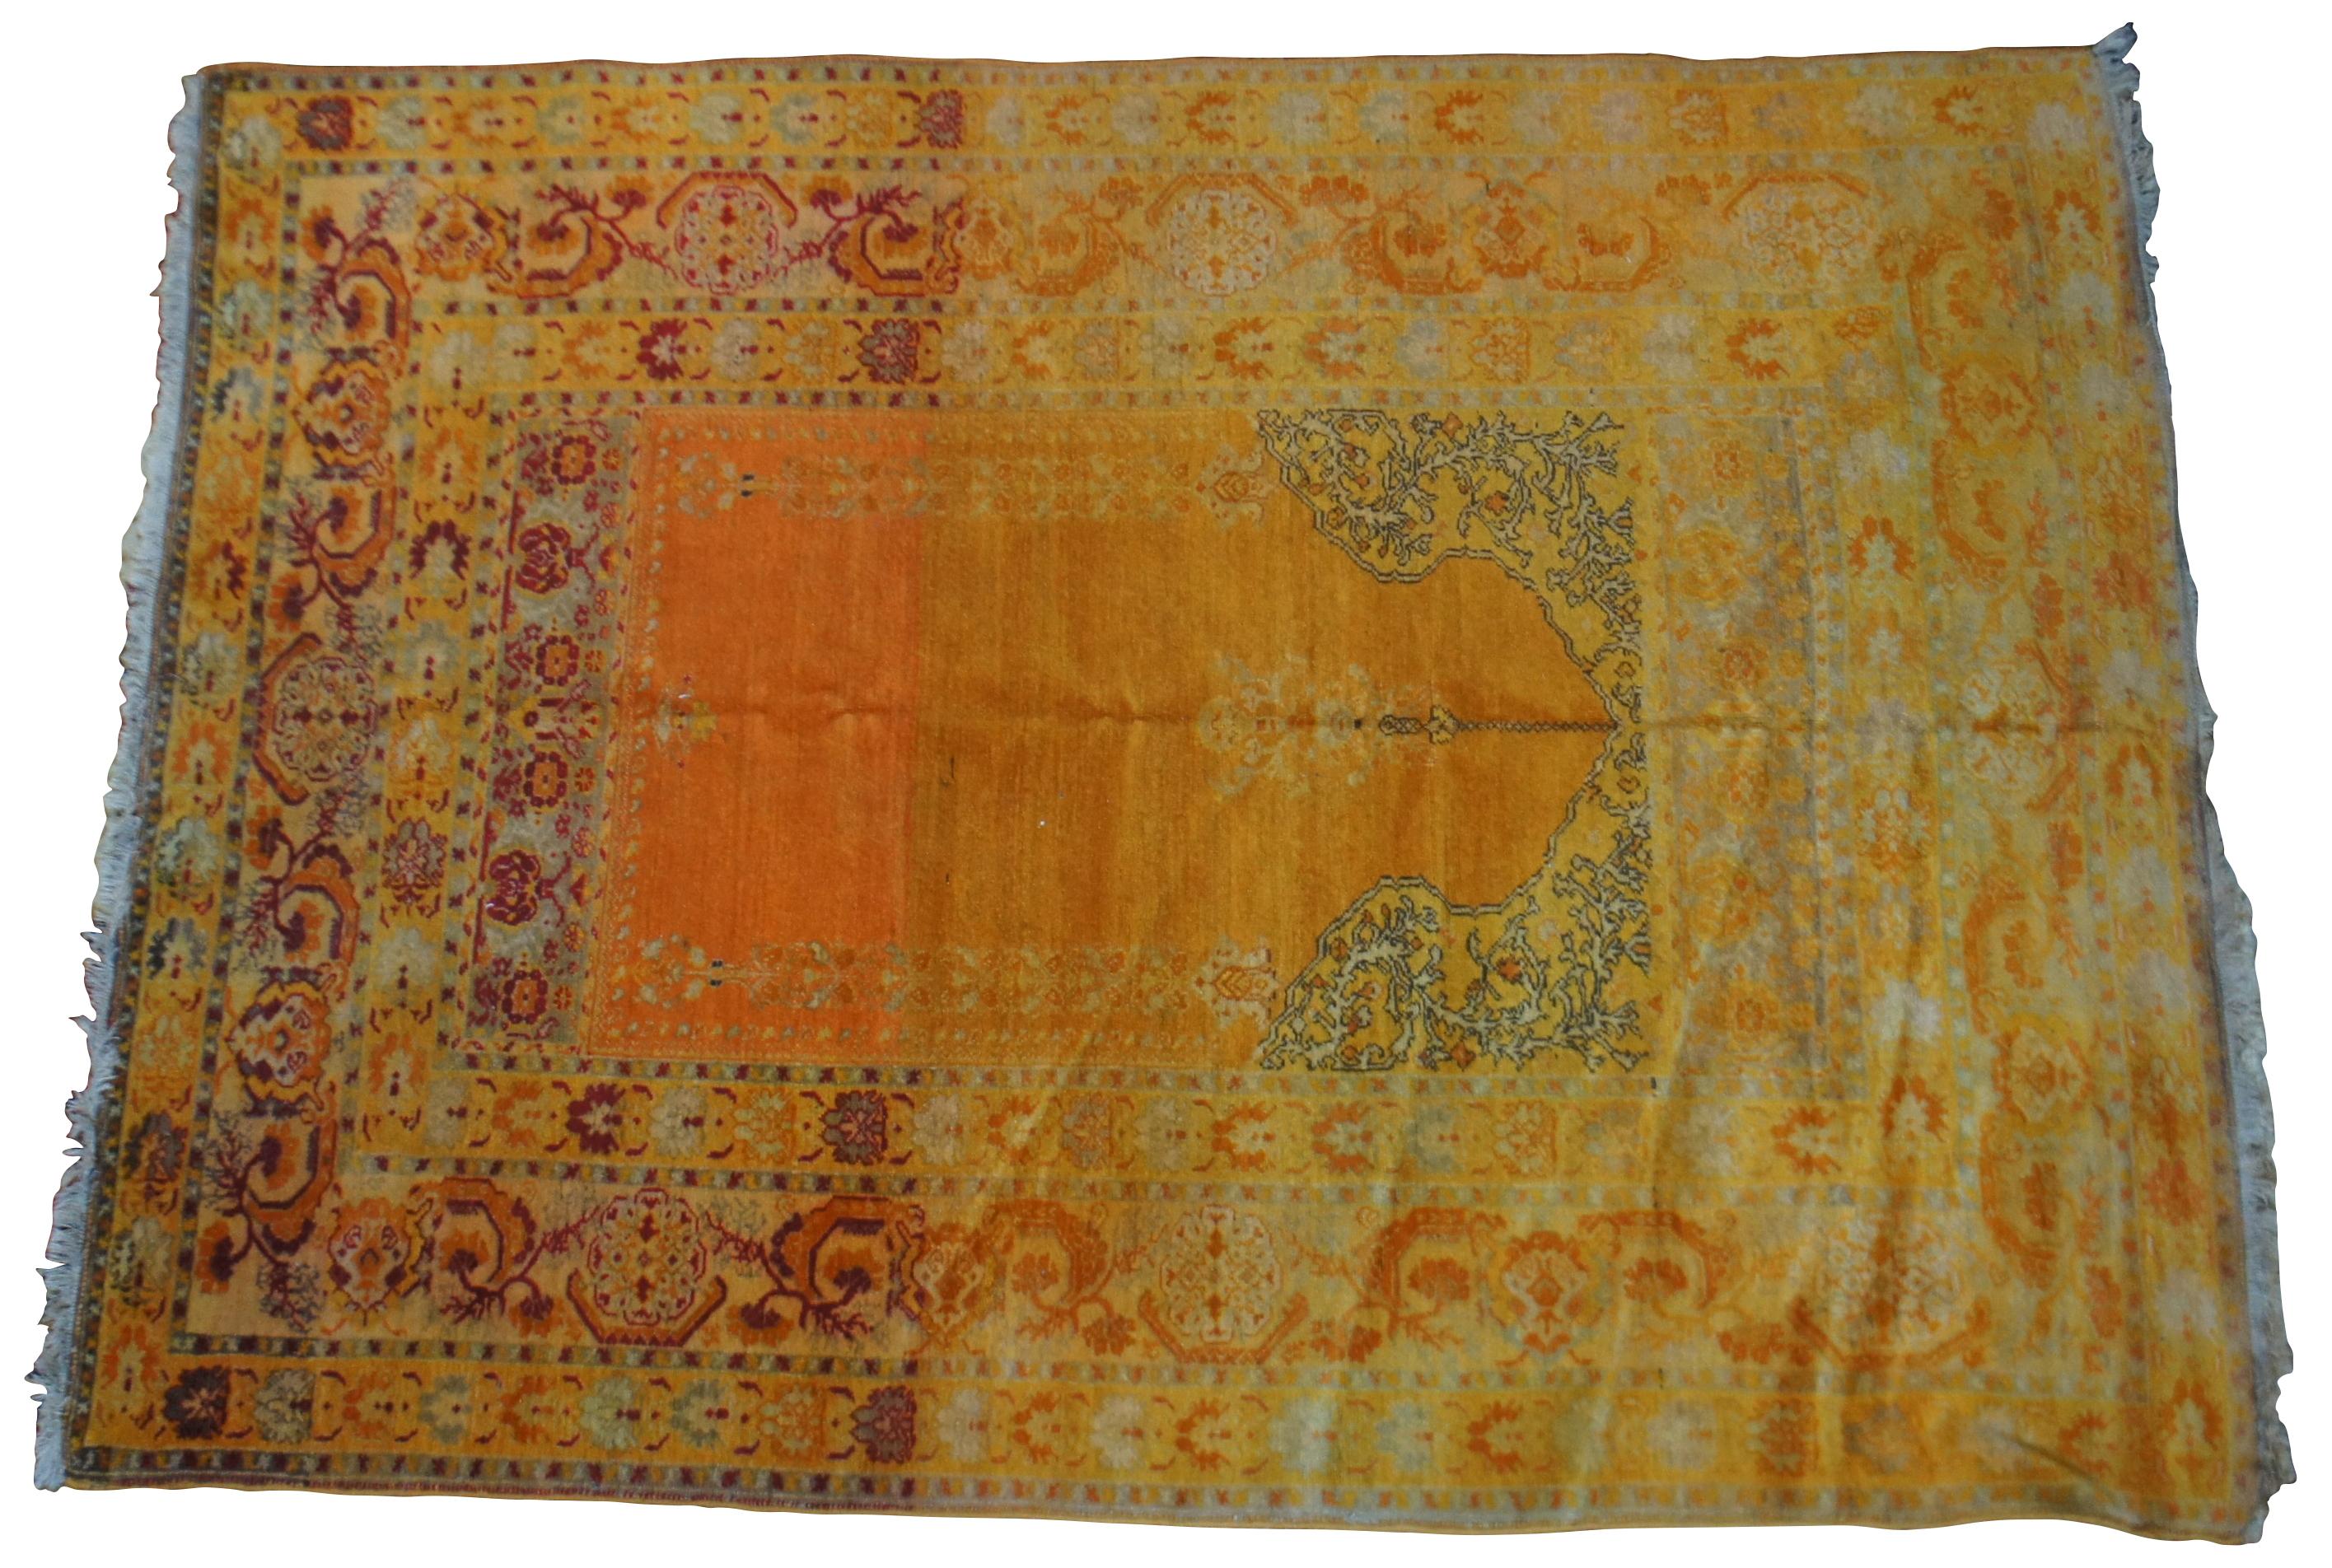 Islamic Antique Handmade Wool Geometric Orange Red Turkish Prayer Rug Mat Carpet 6’ x 4’